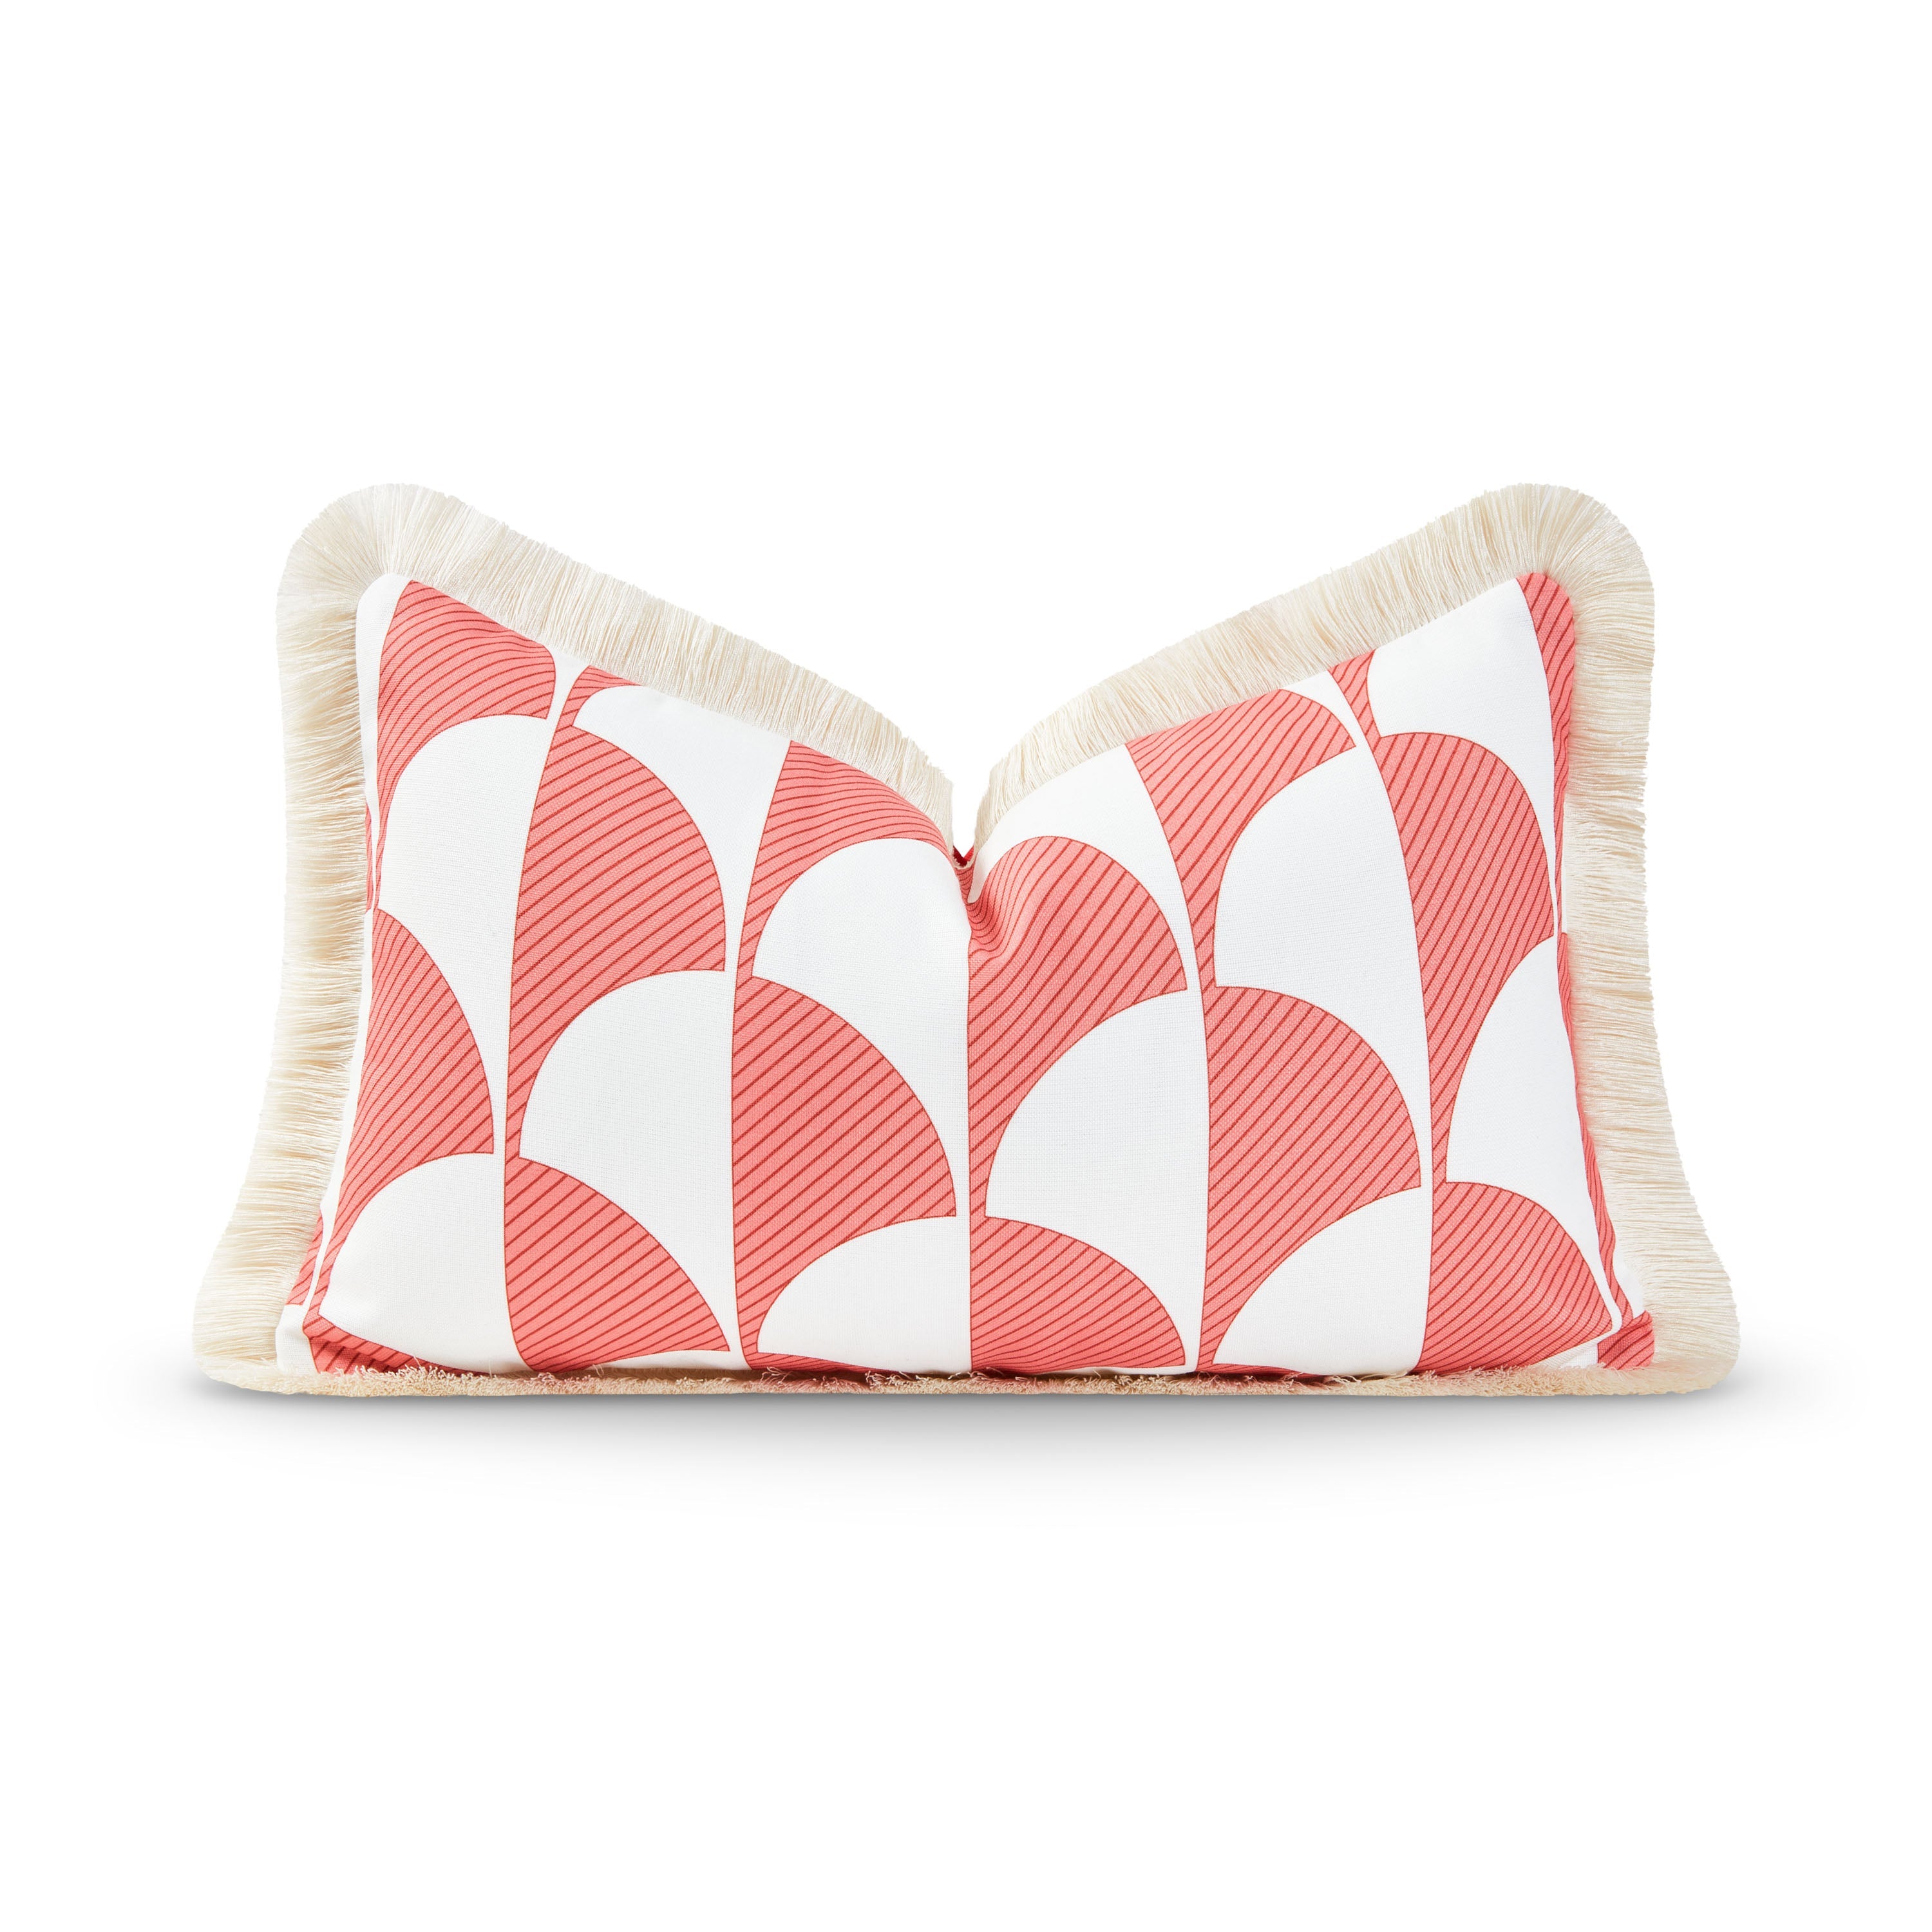 Coastal Indoor Outdoor Lumbar Pillow Cover, Scale Motif Fringe, Coral Pink, 12"x20"-0